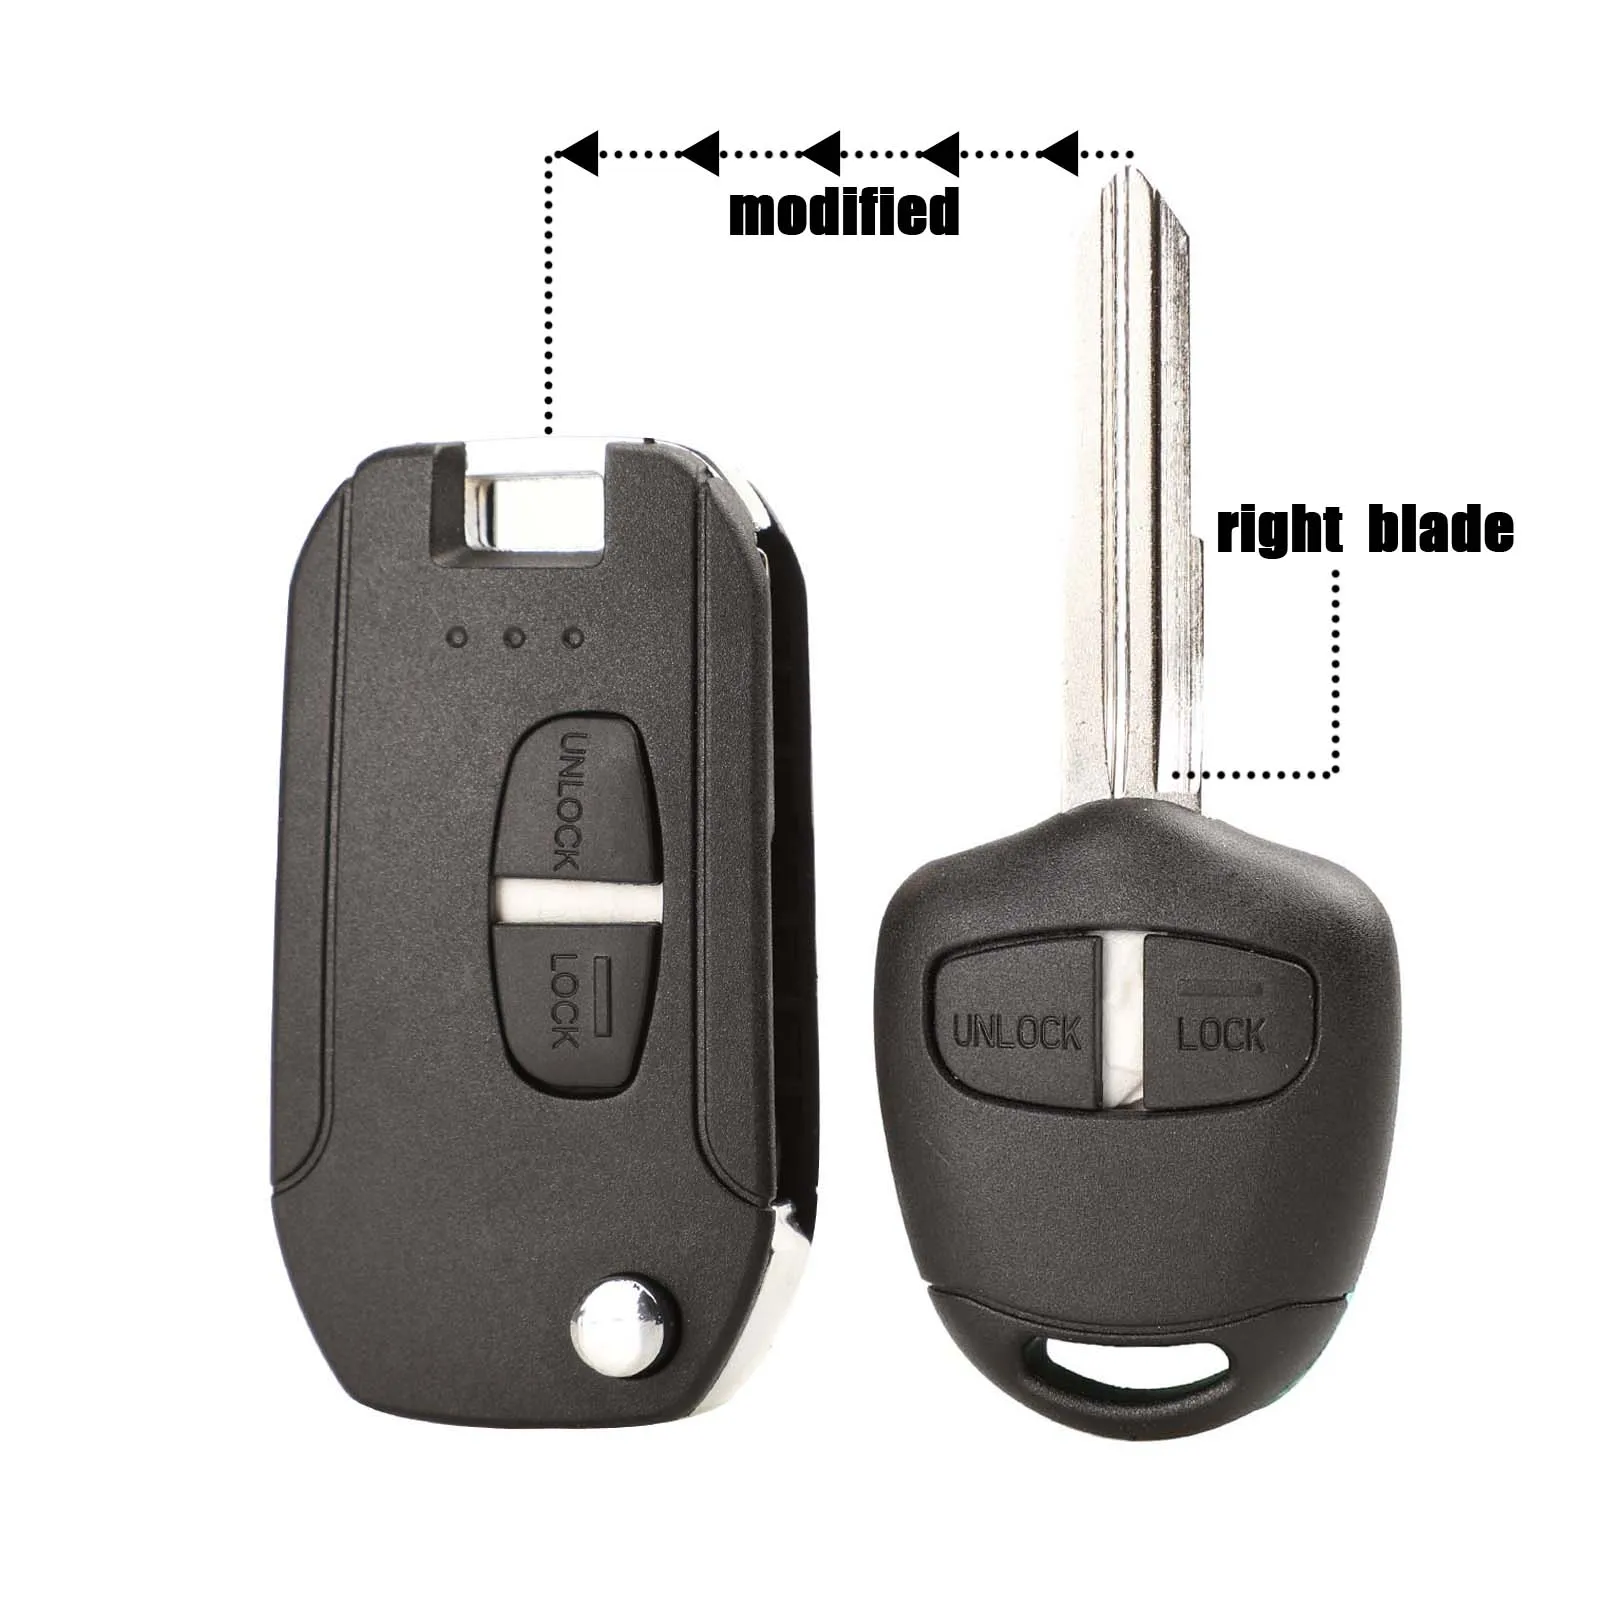 Jingyuqin 2/3 кнопки модифицированный ключ чехол оболочка для Mitsubishi Lancer Evo Colt Outlander Mirage Keyless(правое лезвие